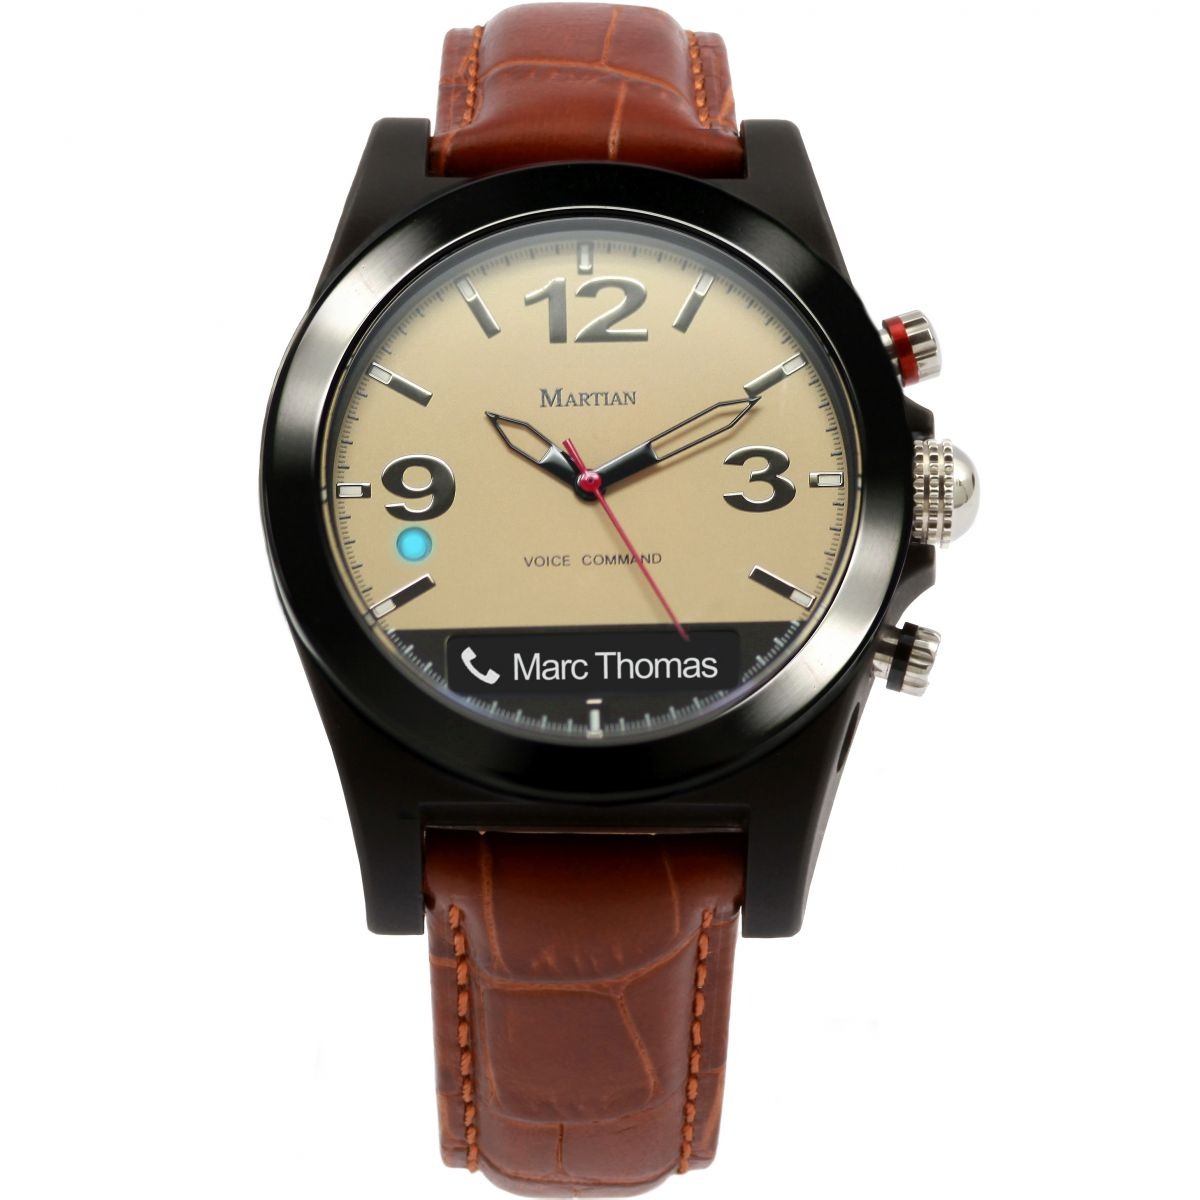 Watch Shop - Smartwatch Brown - Martian GOOFASH